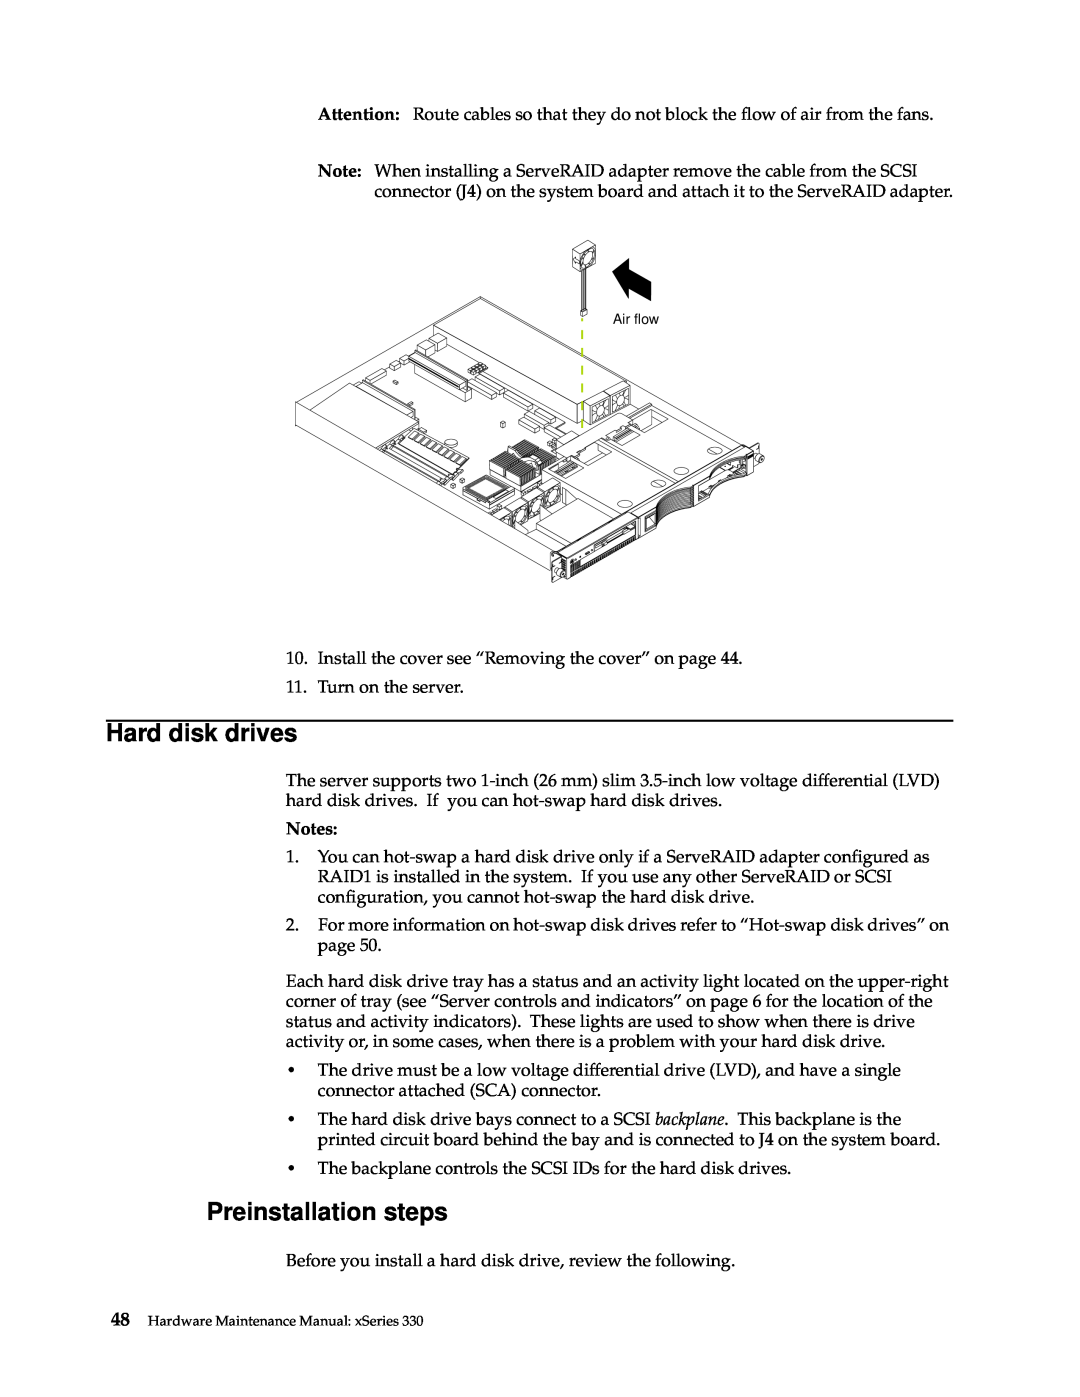 IBM xSeries 330 manual Hard disk drives, Preinstallation steps, Notes 